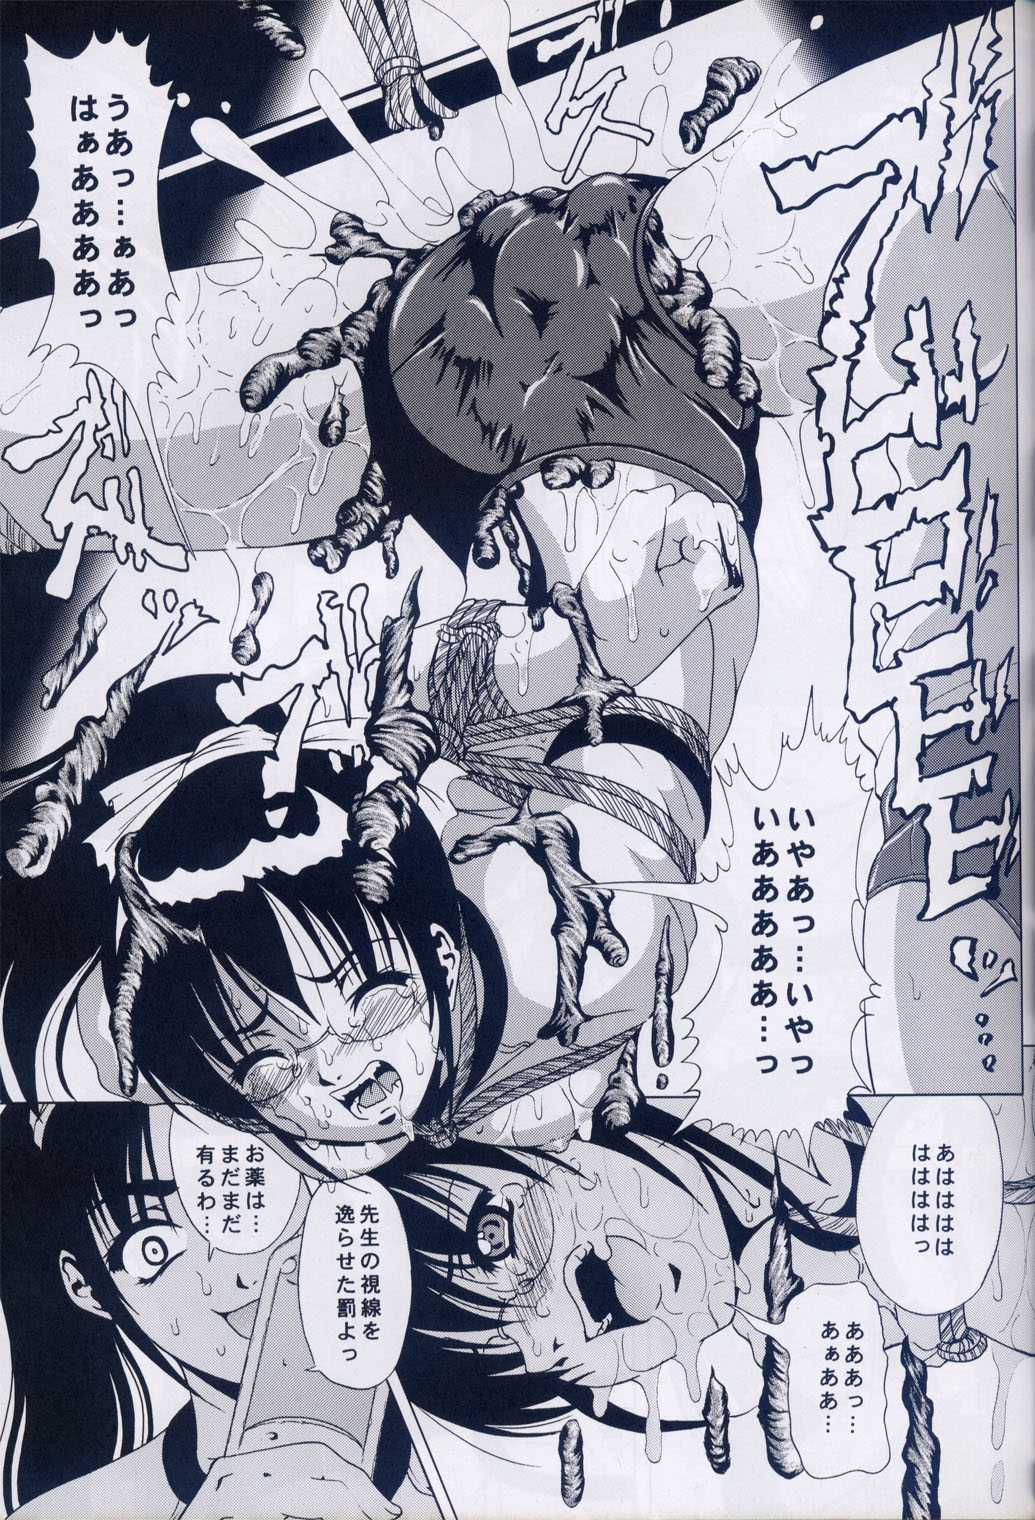 (C64) [Kikka-Shurou (Kikusui)] Azure Angels ver.1.0 (C64) [菊花酒楼 (菊水)] Azure Angels ver.1.0